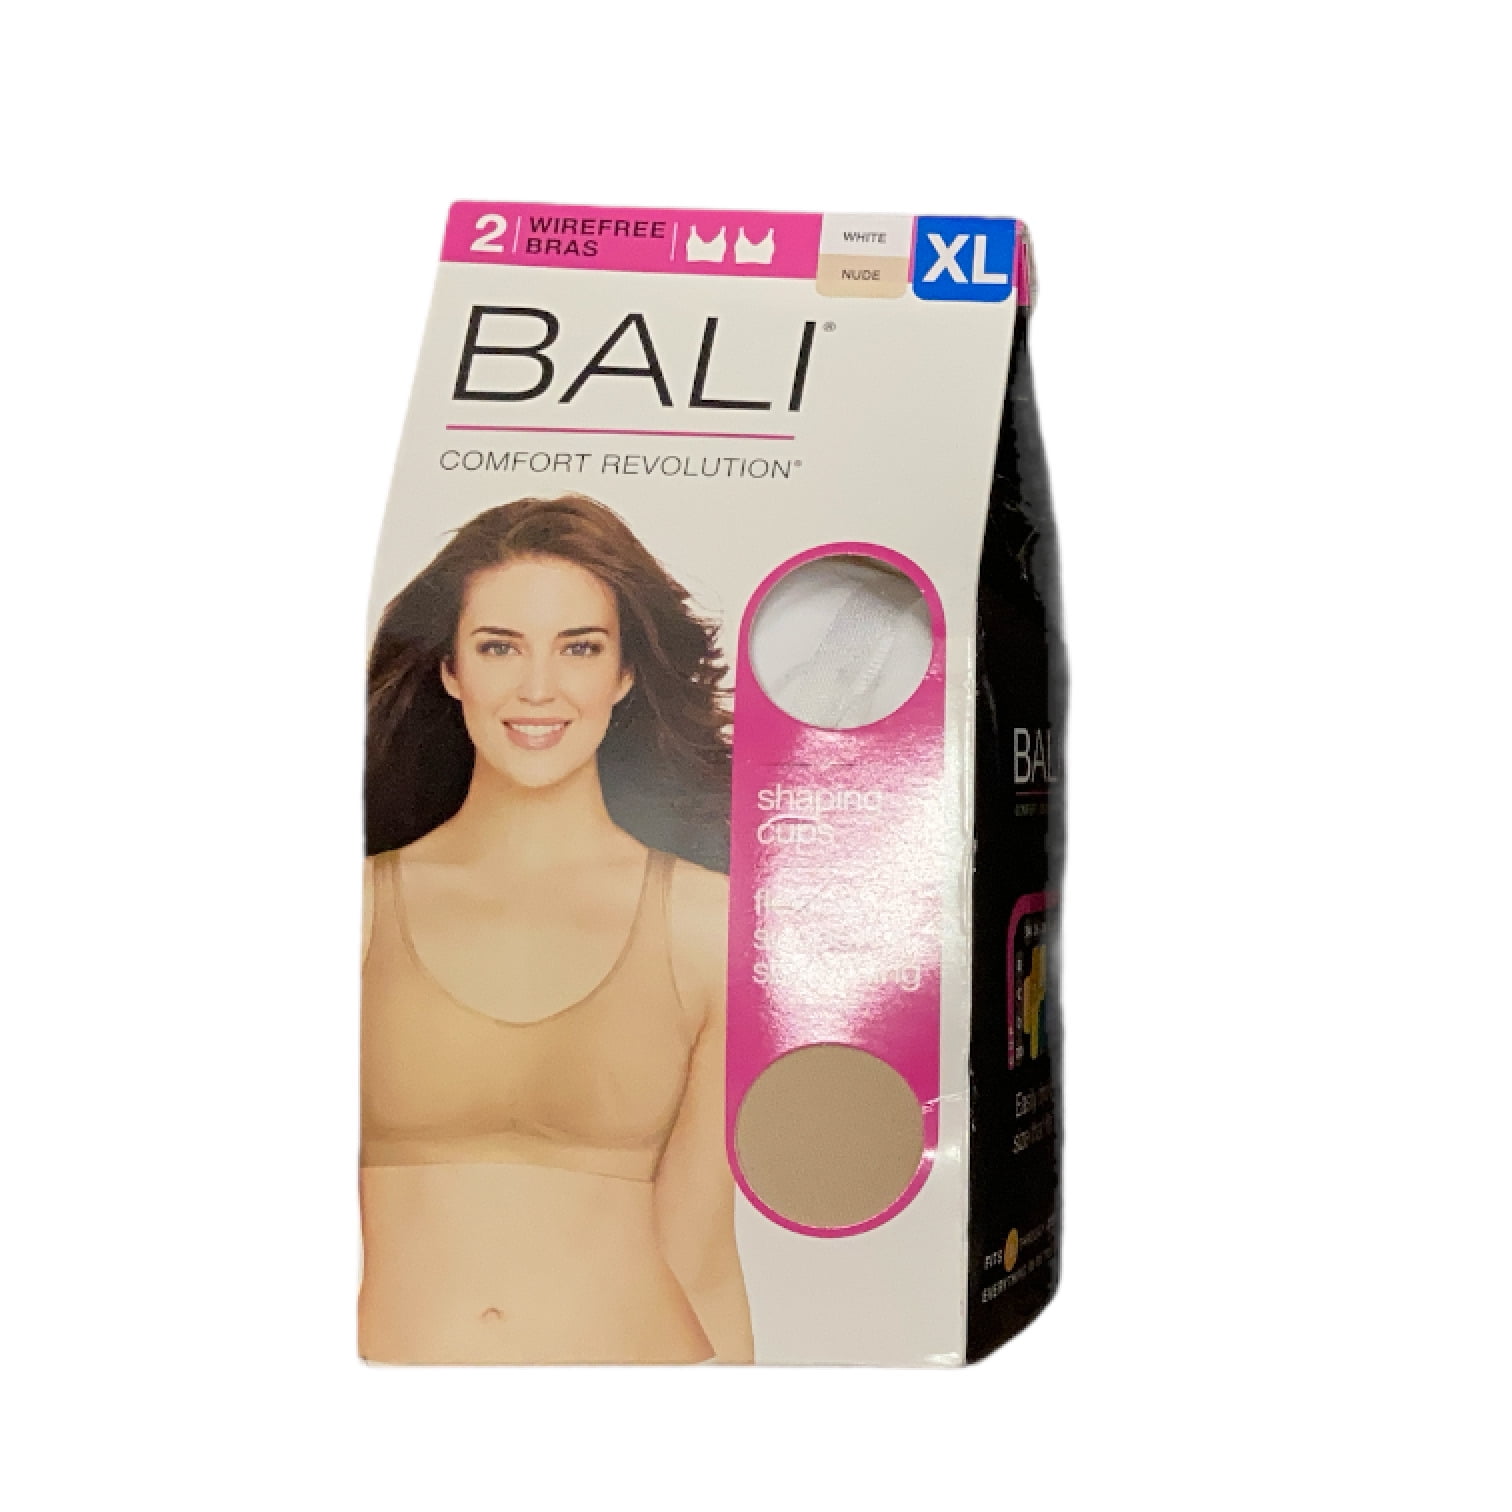 Bali Women's Comfort Revolution Flexible Wireless Shaping Bra, 2 Pack  (White/Nude, L) 